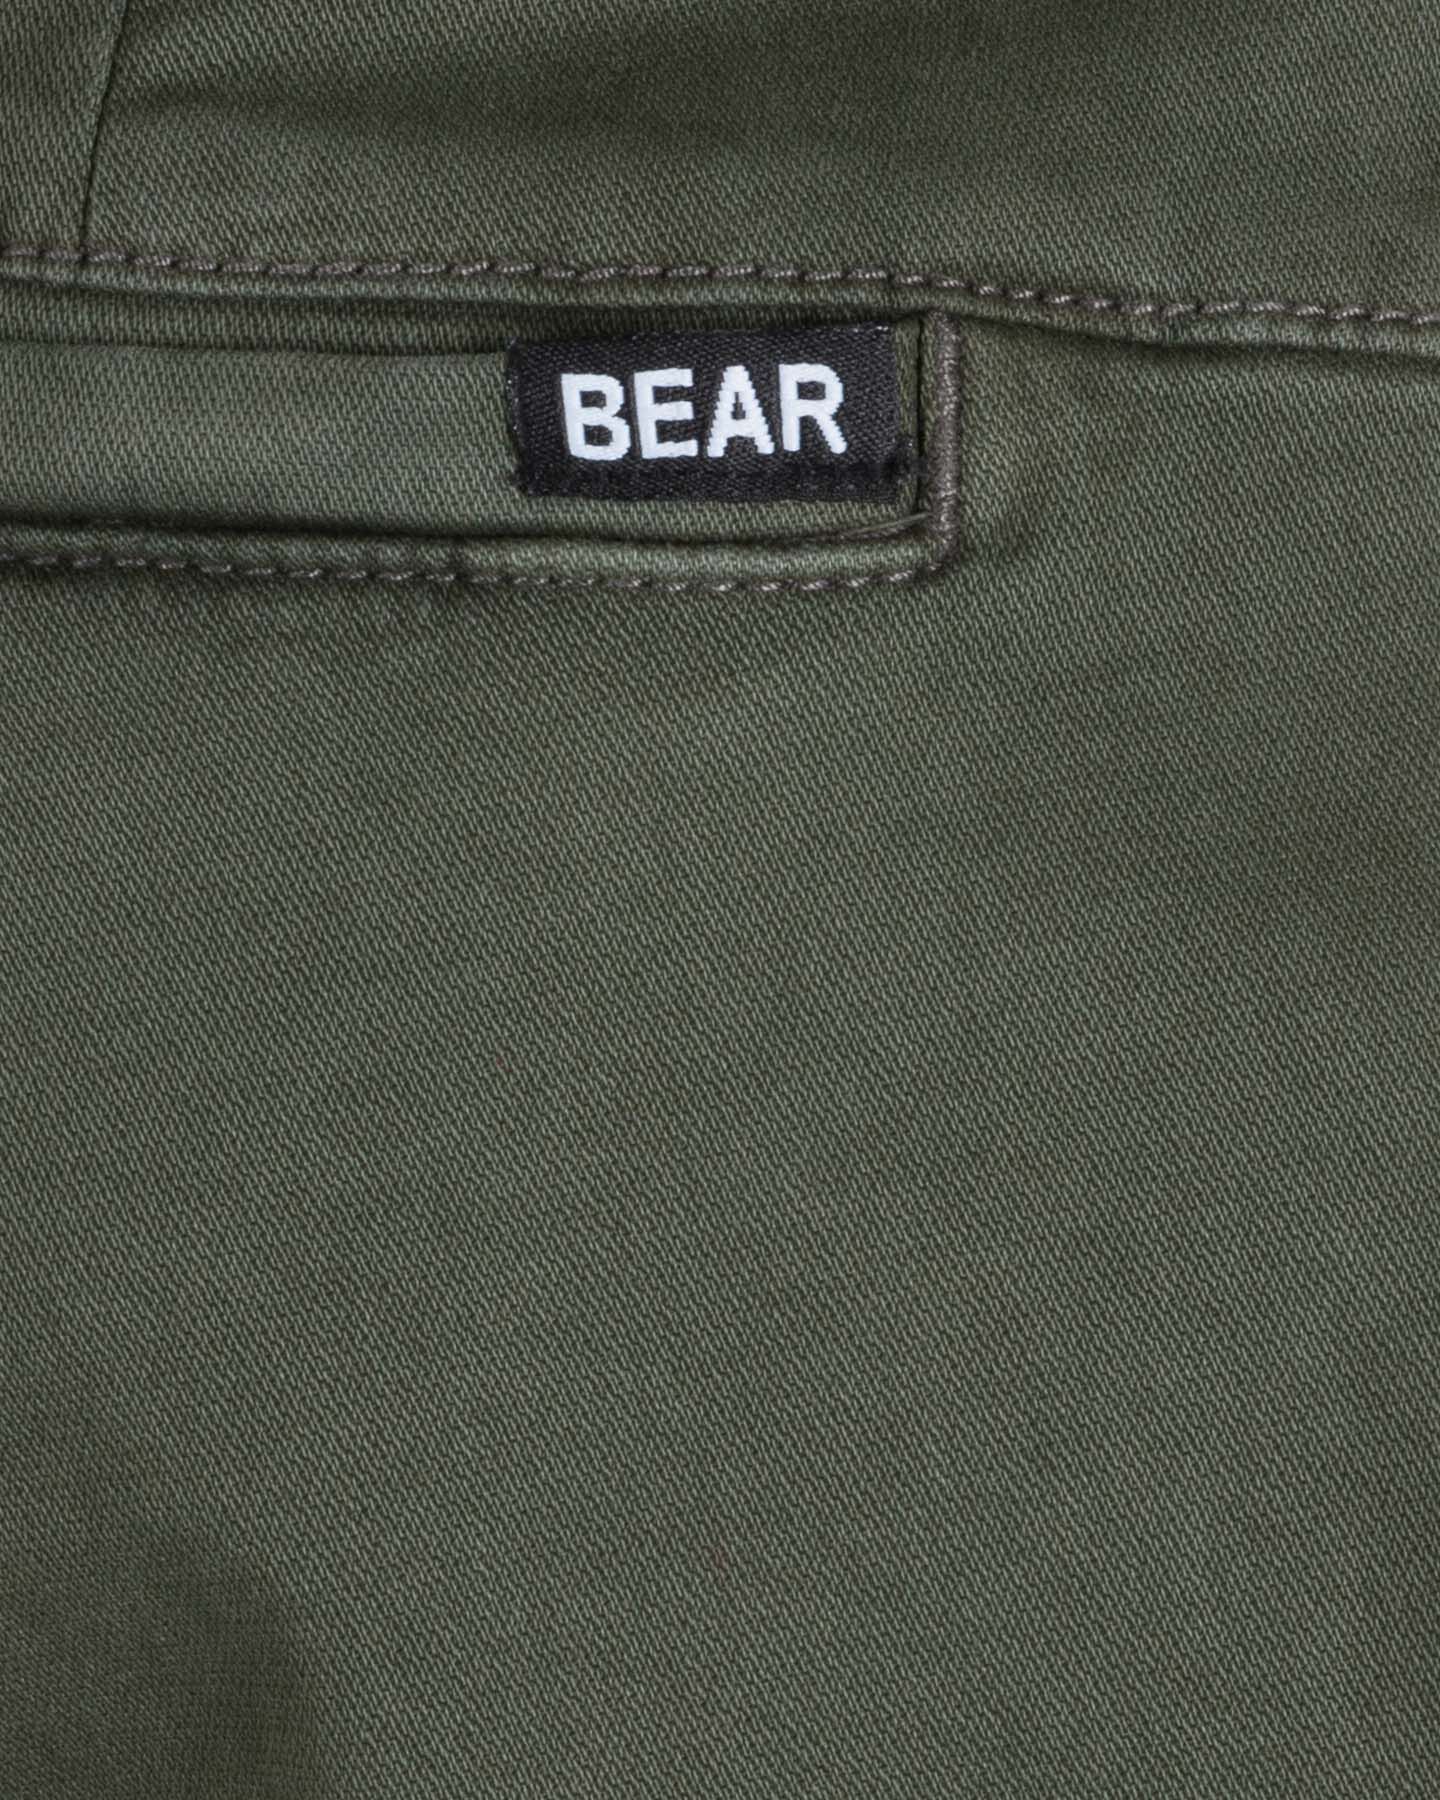  Pantalone BEAR SEASONAL JR S4108756|854|8 scatto 2